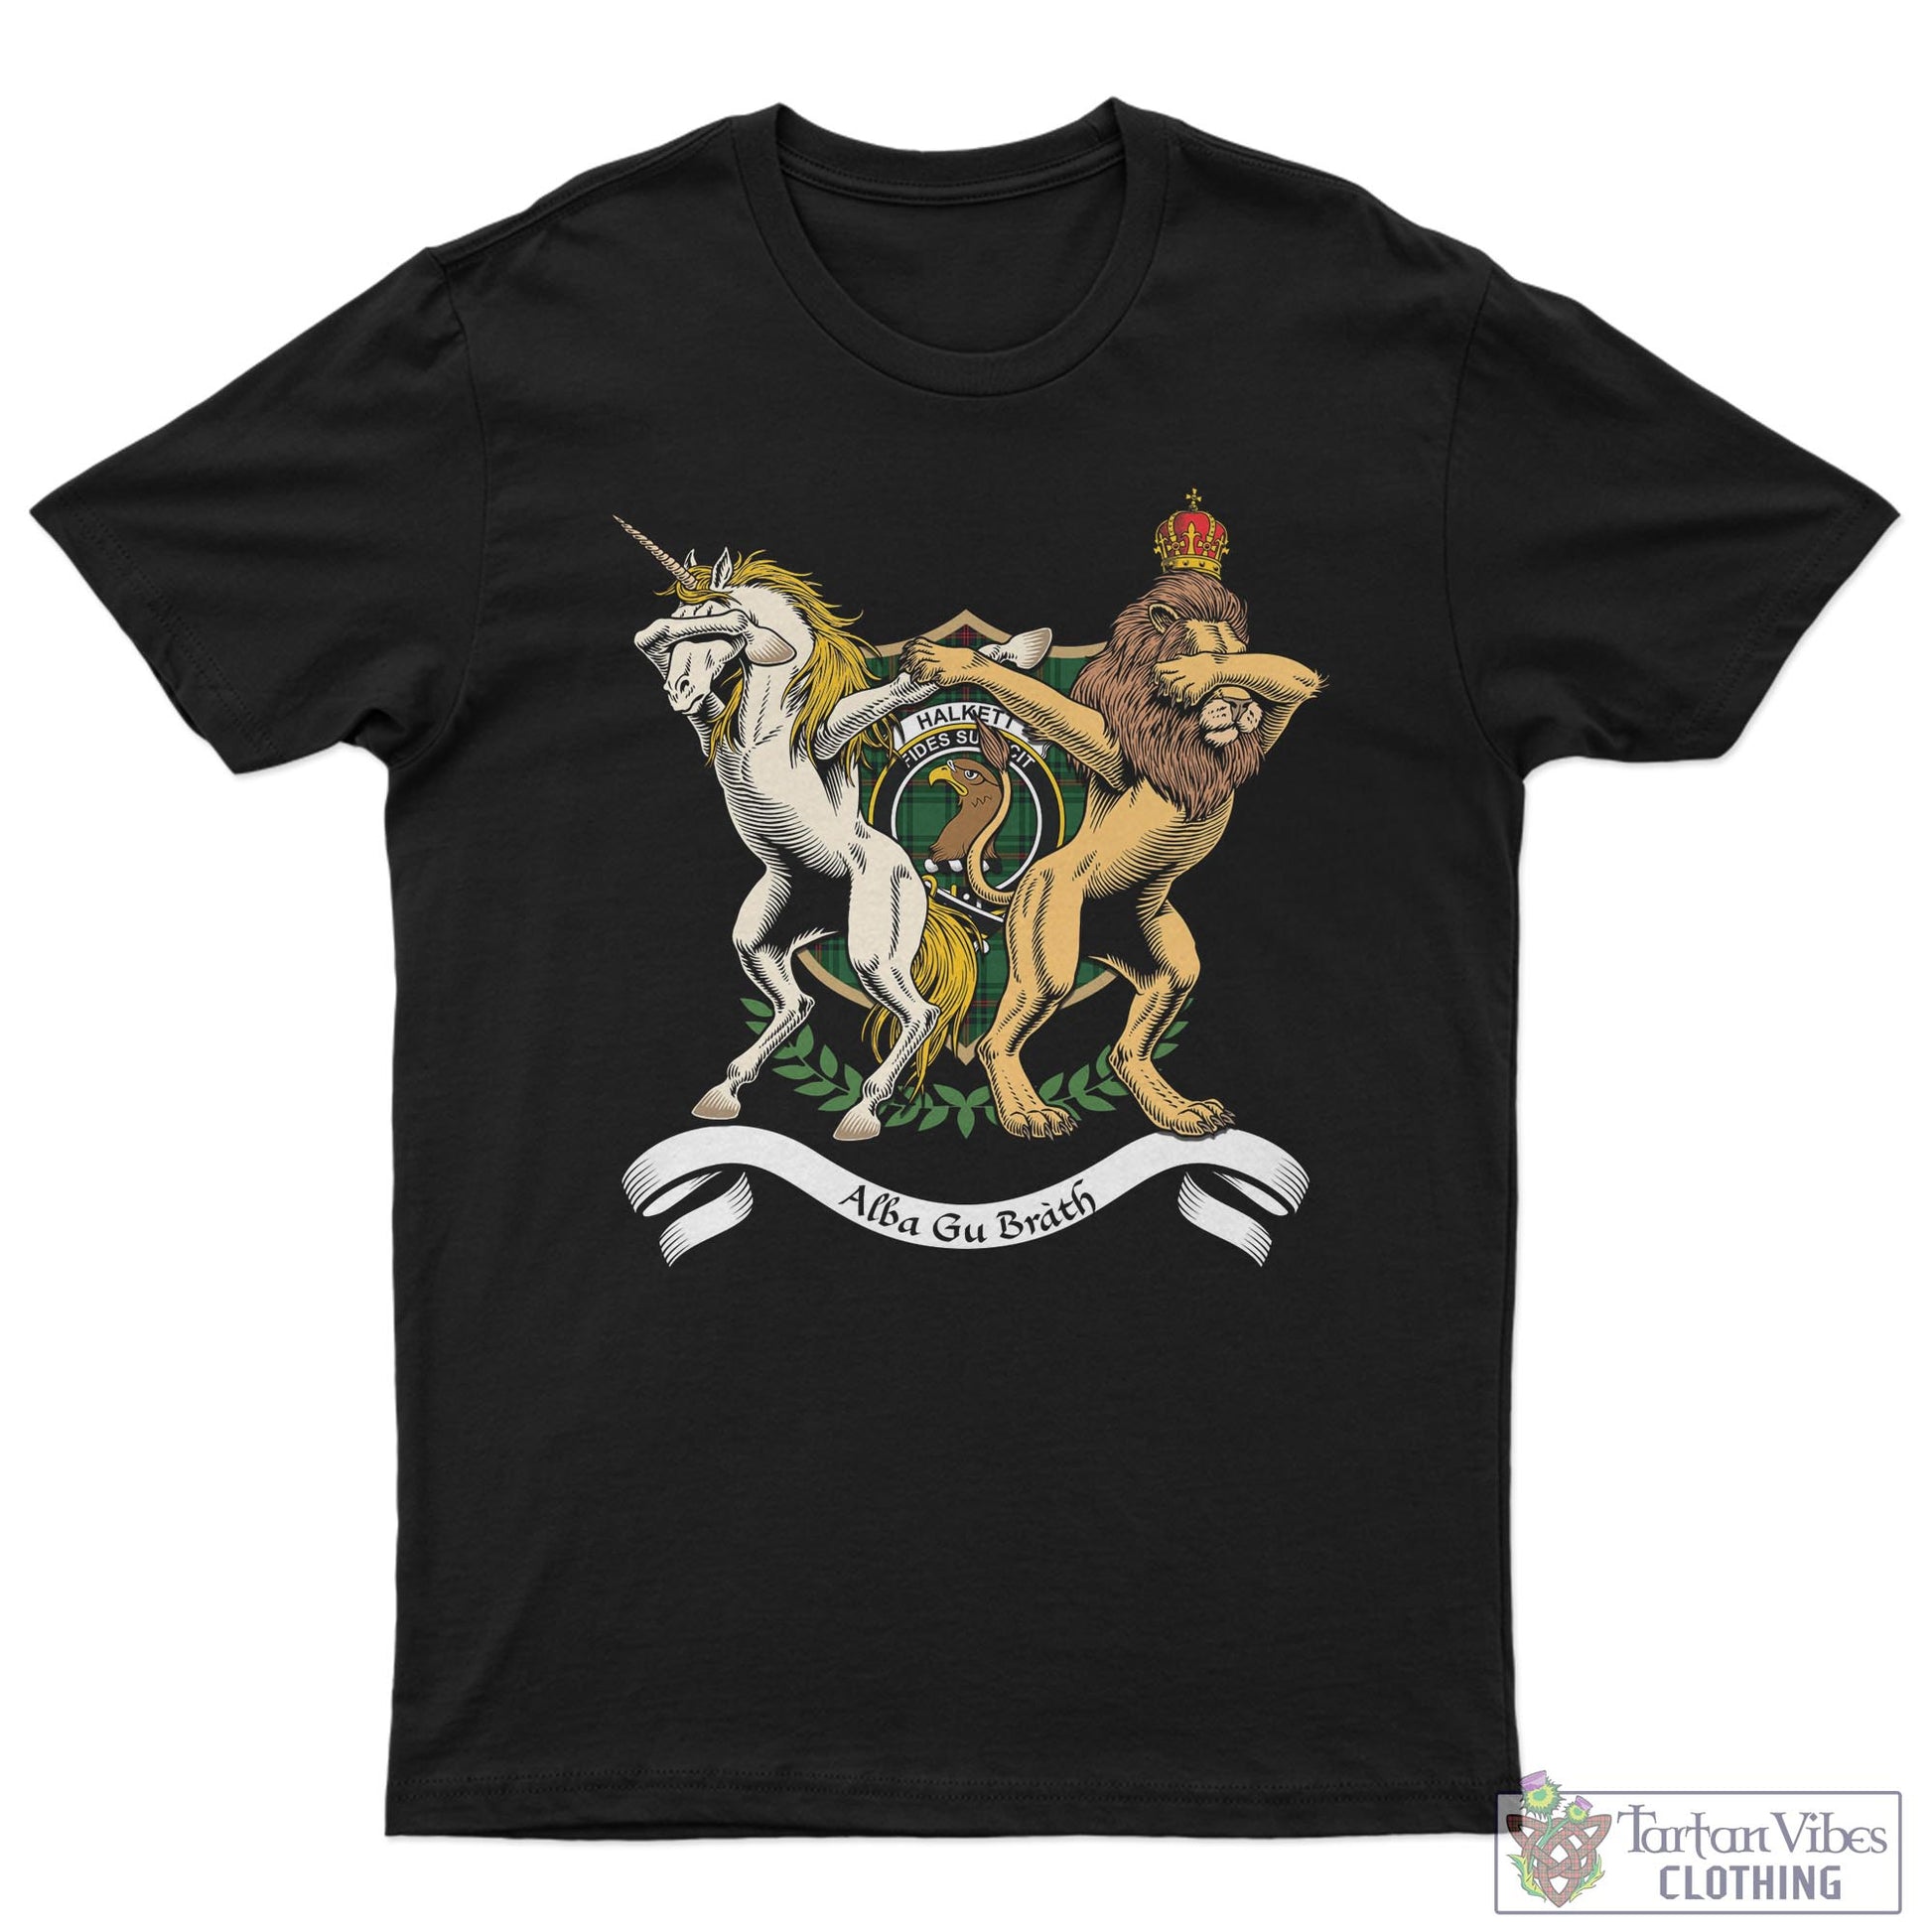 Tartan Vibes Clothing Halkett Family Crest Cotton Men's T-Shirt with Scotland Royal Coat Of Arm Funny Style